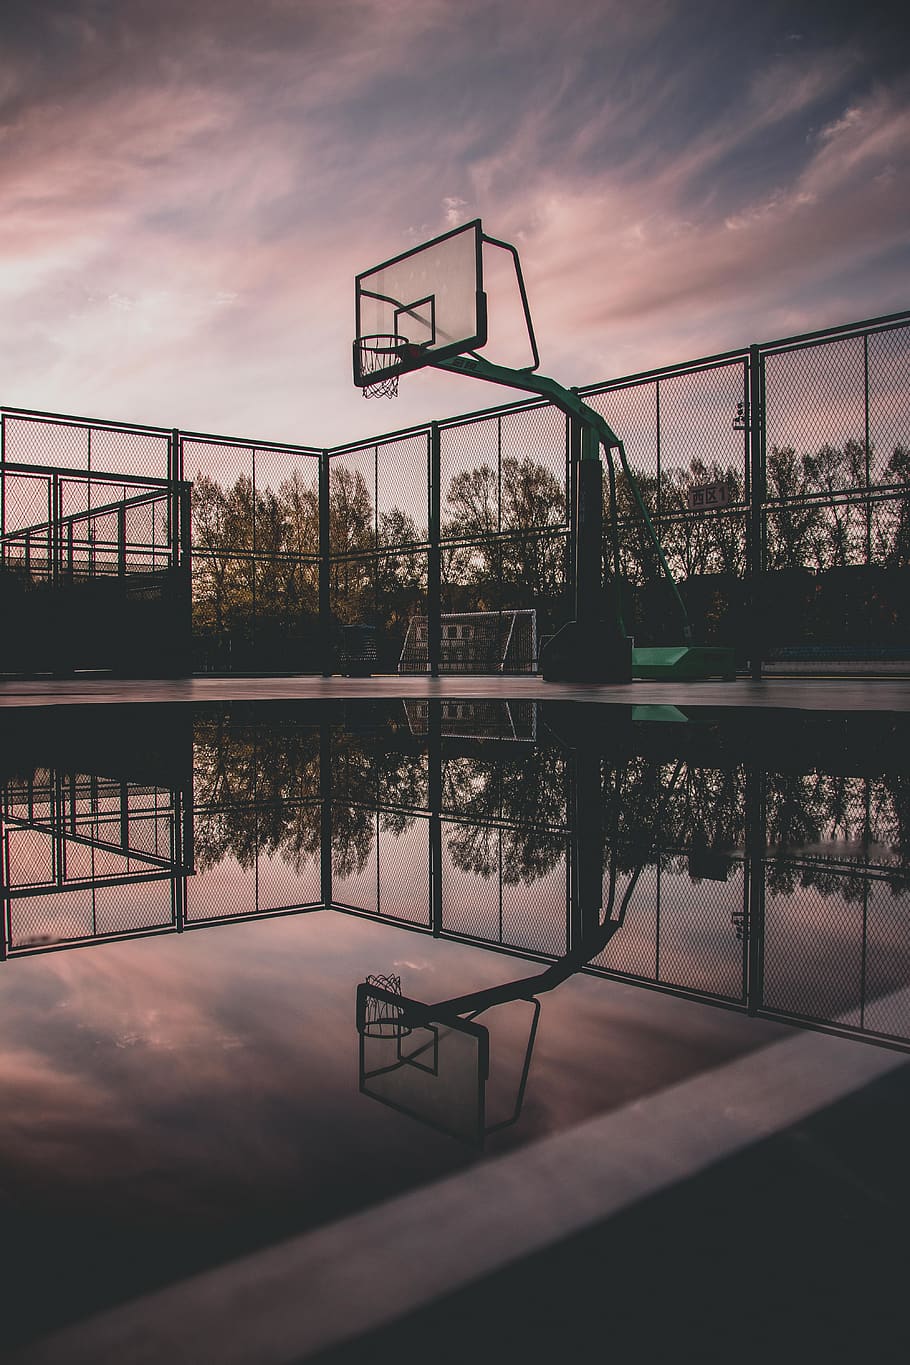 HD Wallpaper Silhouette Photo Of Portable Basketball